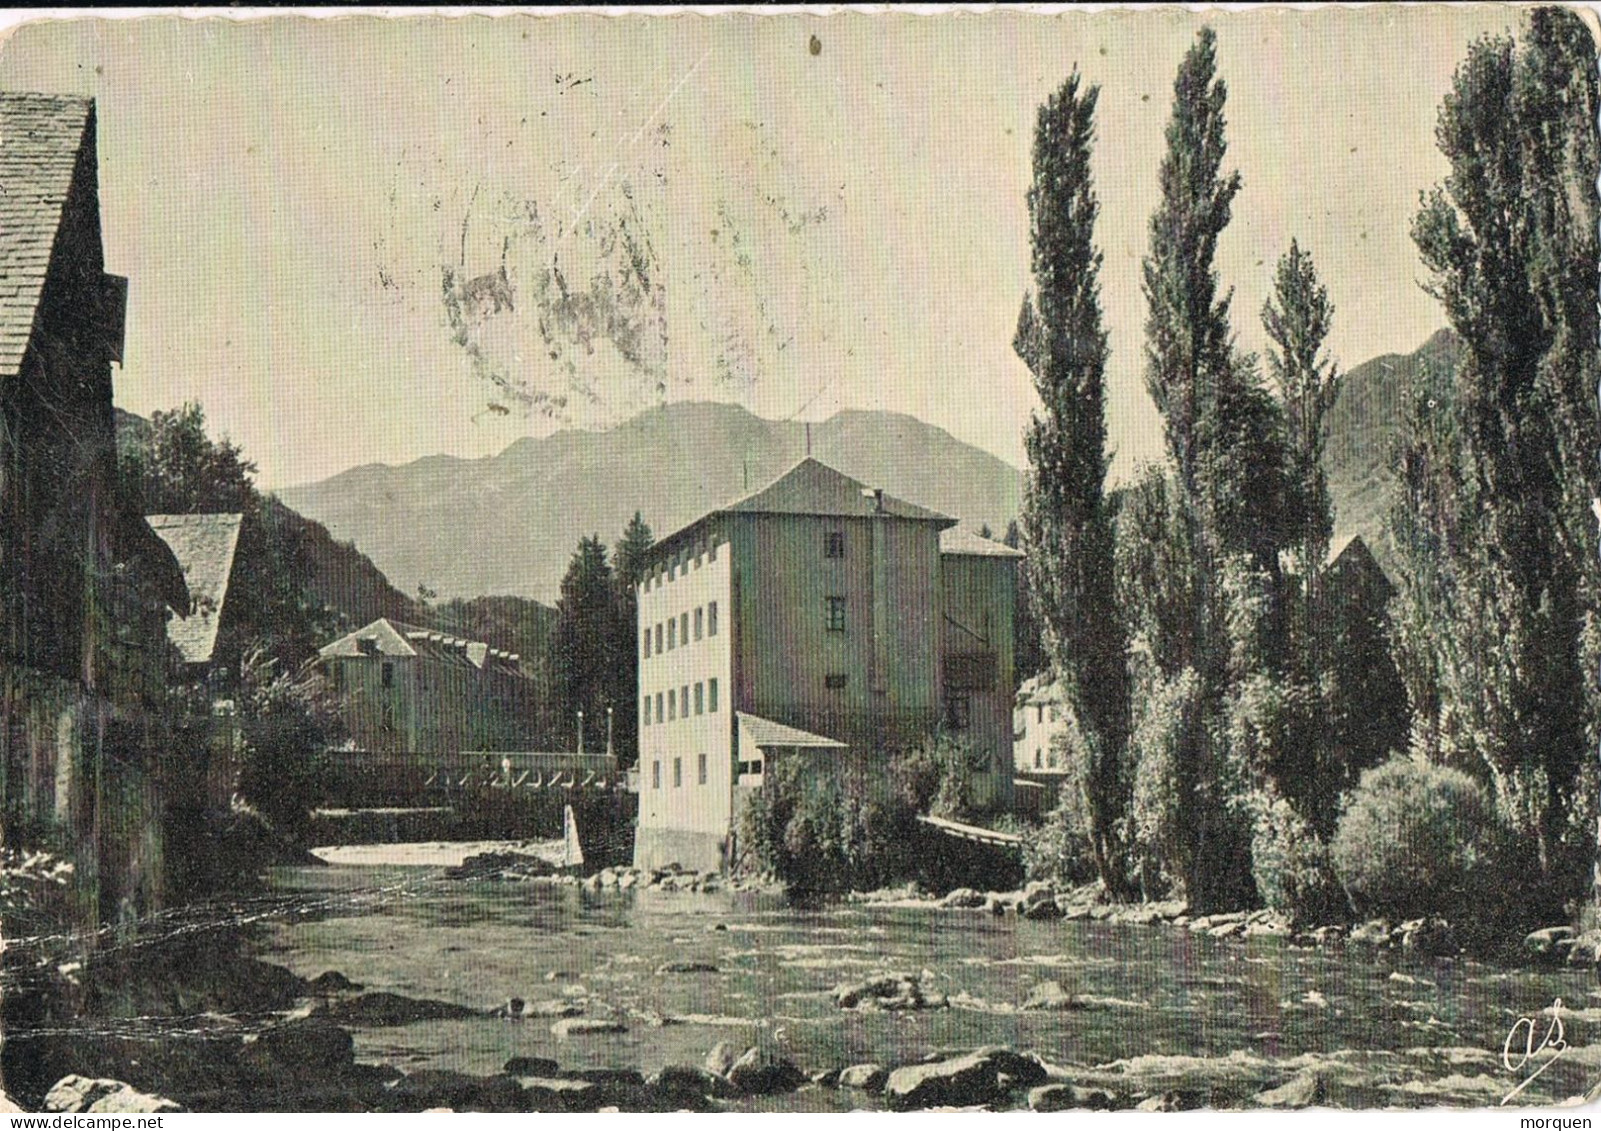 54953. Postal LÉS (Lerida) 1956. Vista  De Lés, Vall D'Aran. Rio Garona Y Hotel Europa - Cartas & Documentos